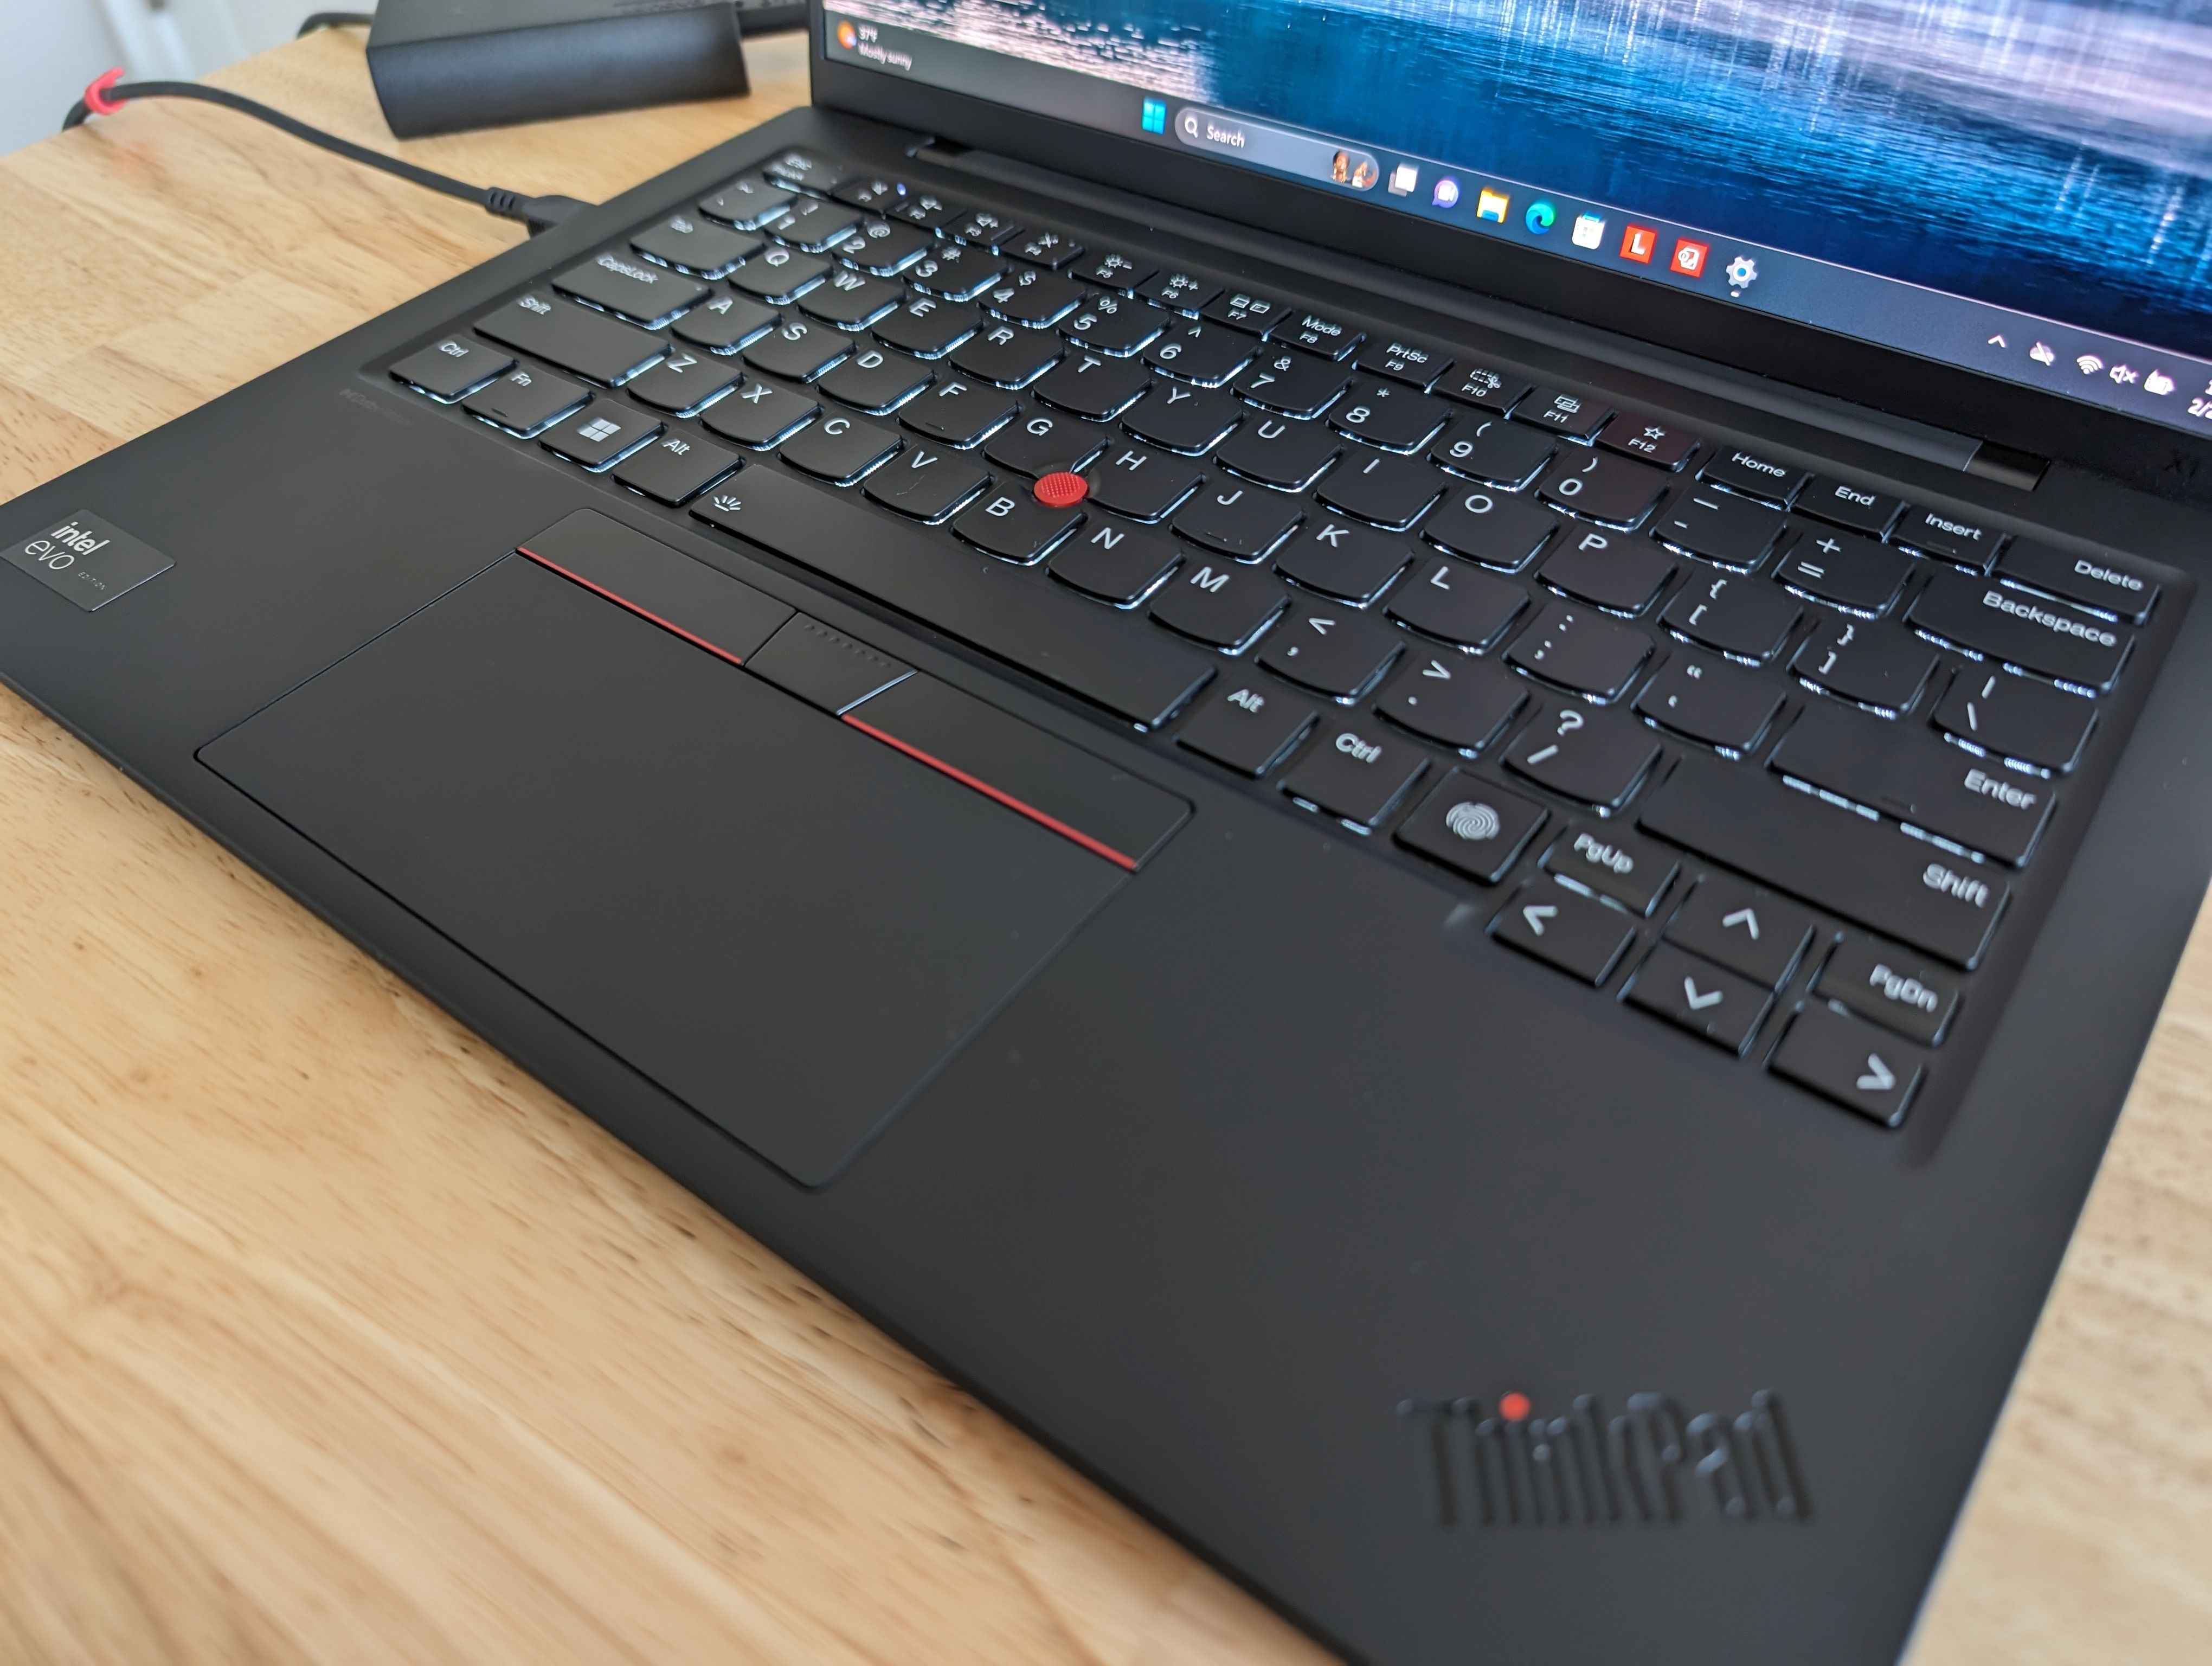 Lenovo ThinkPad keyboard and trackpad